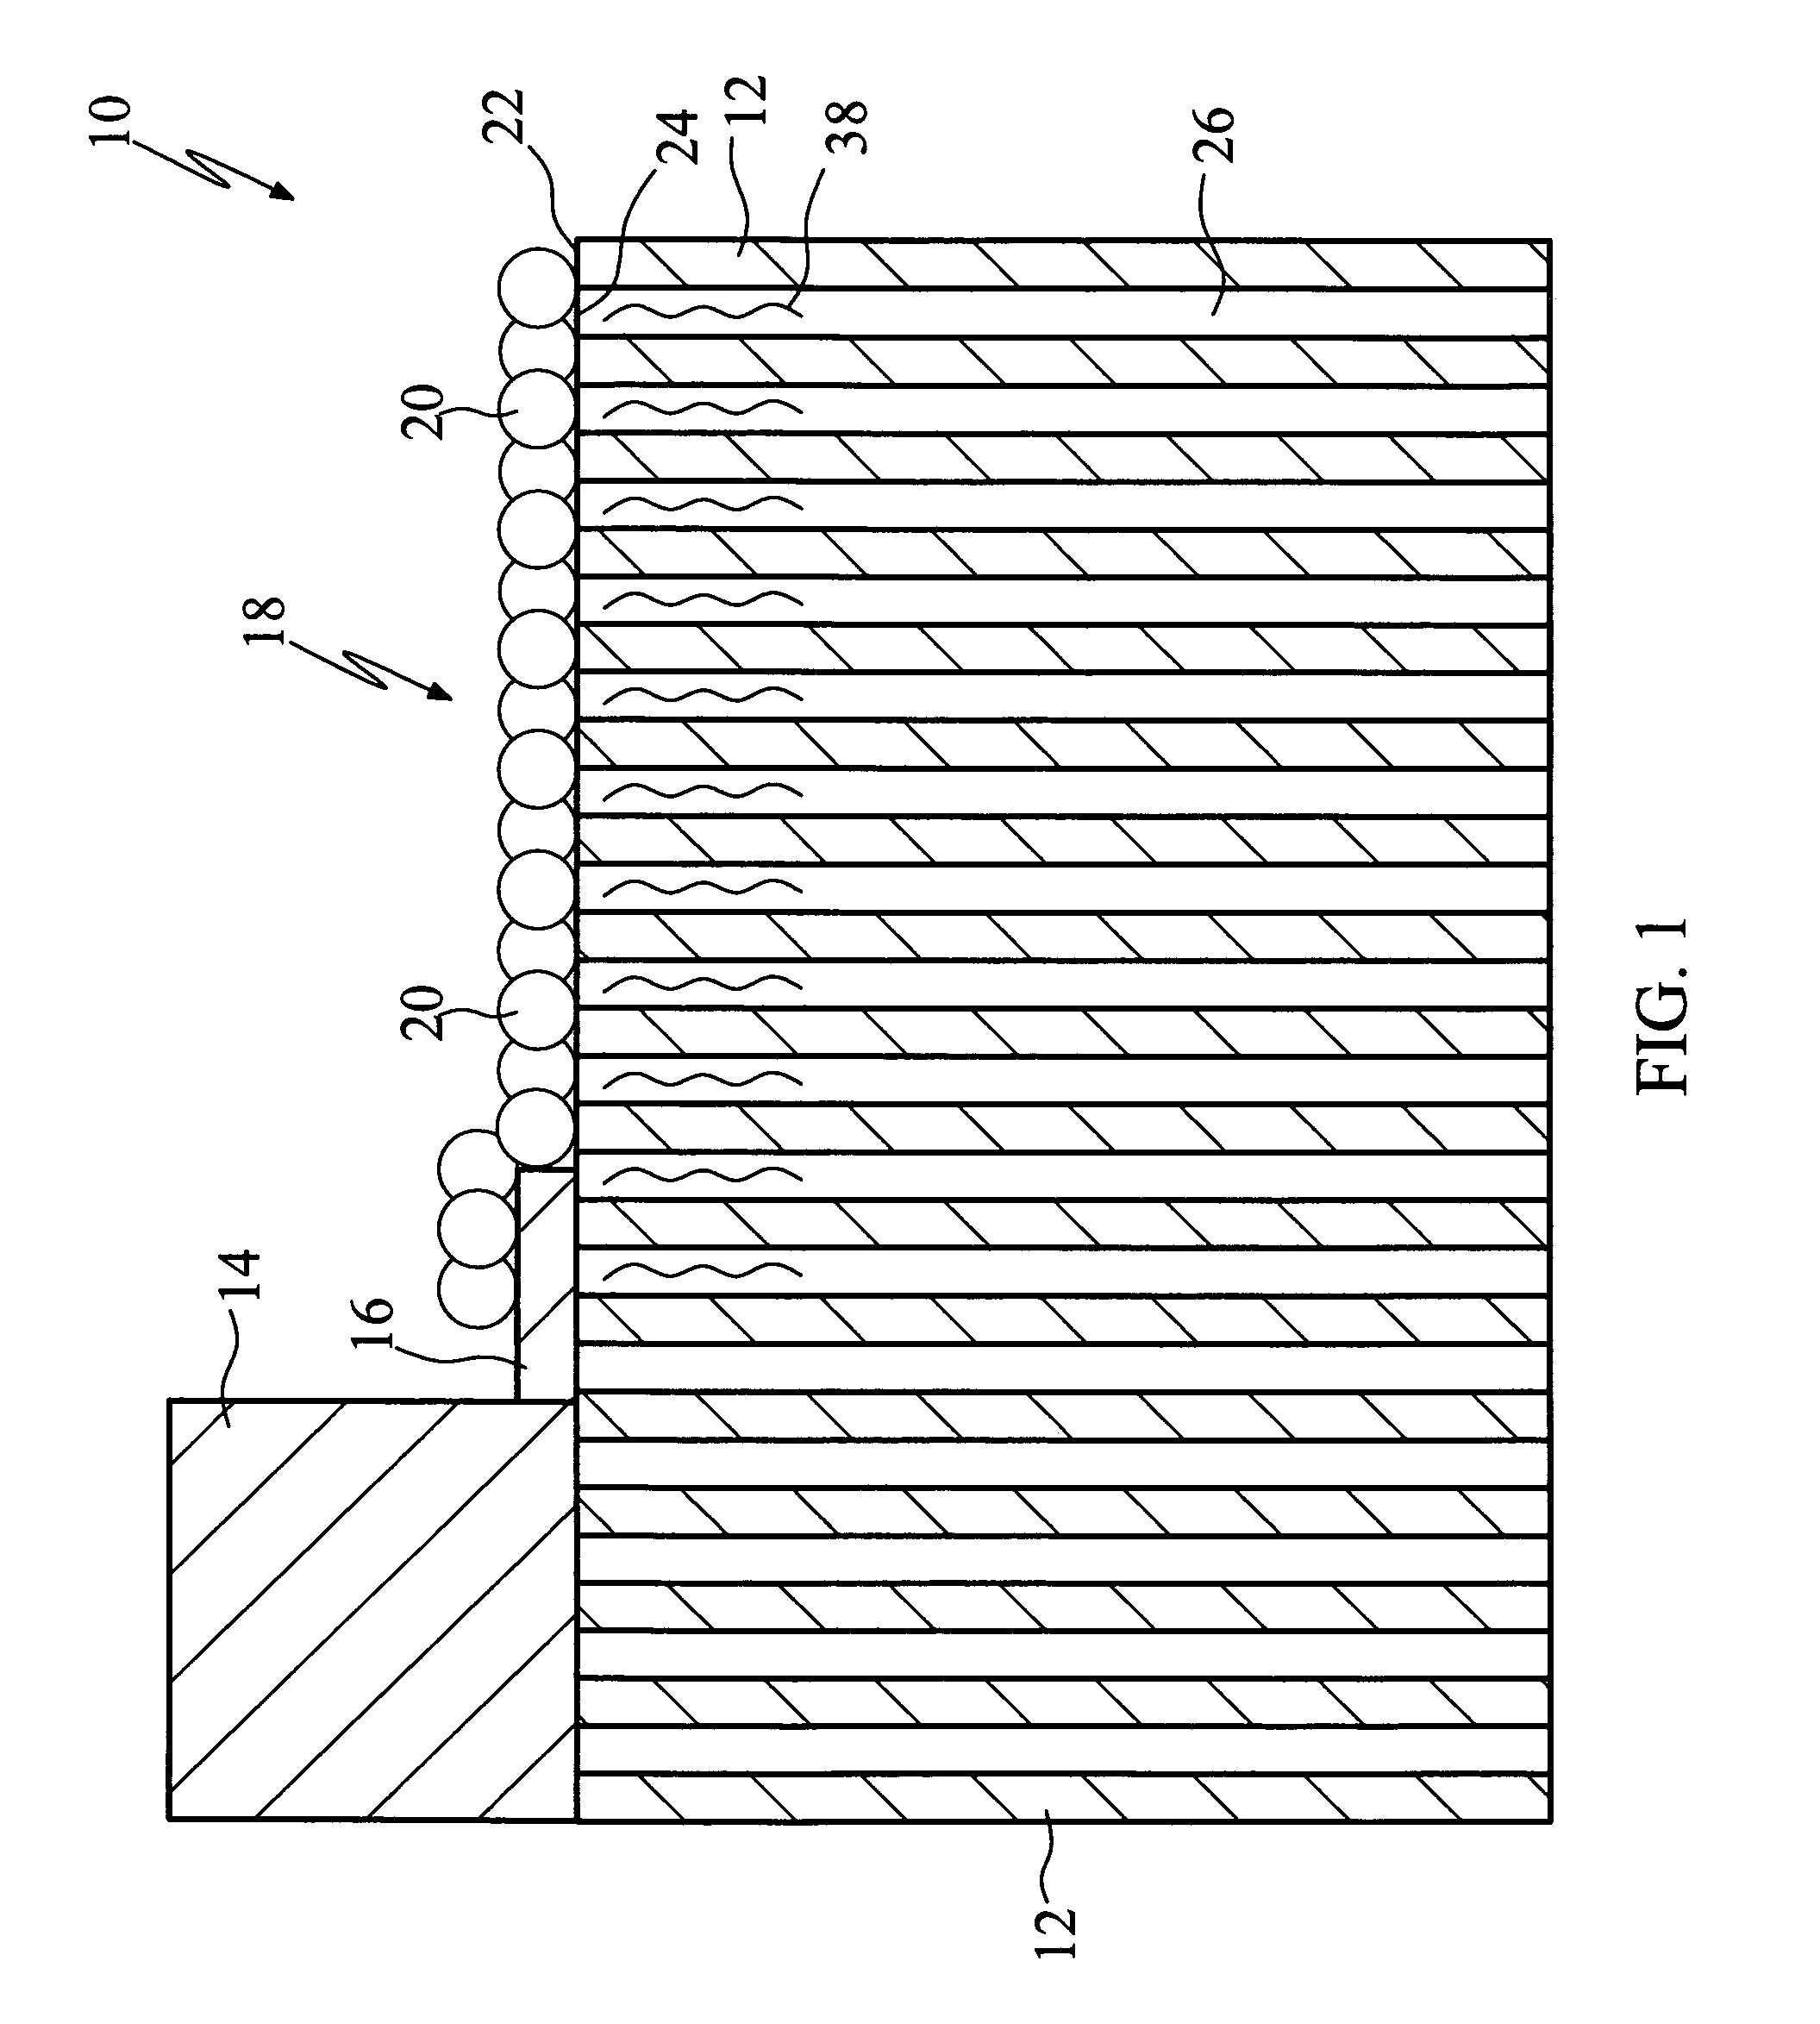 Deposition fabrication using inkjet technology